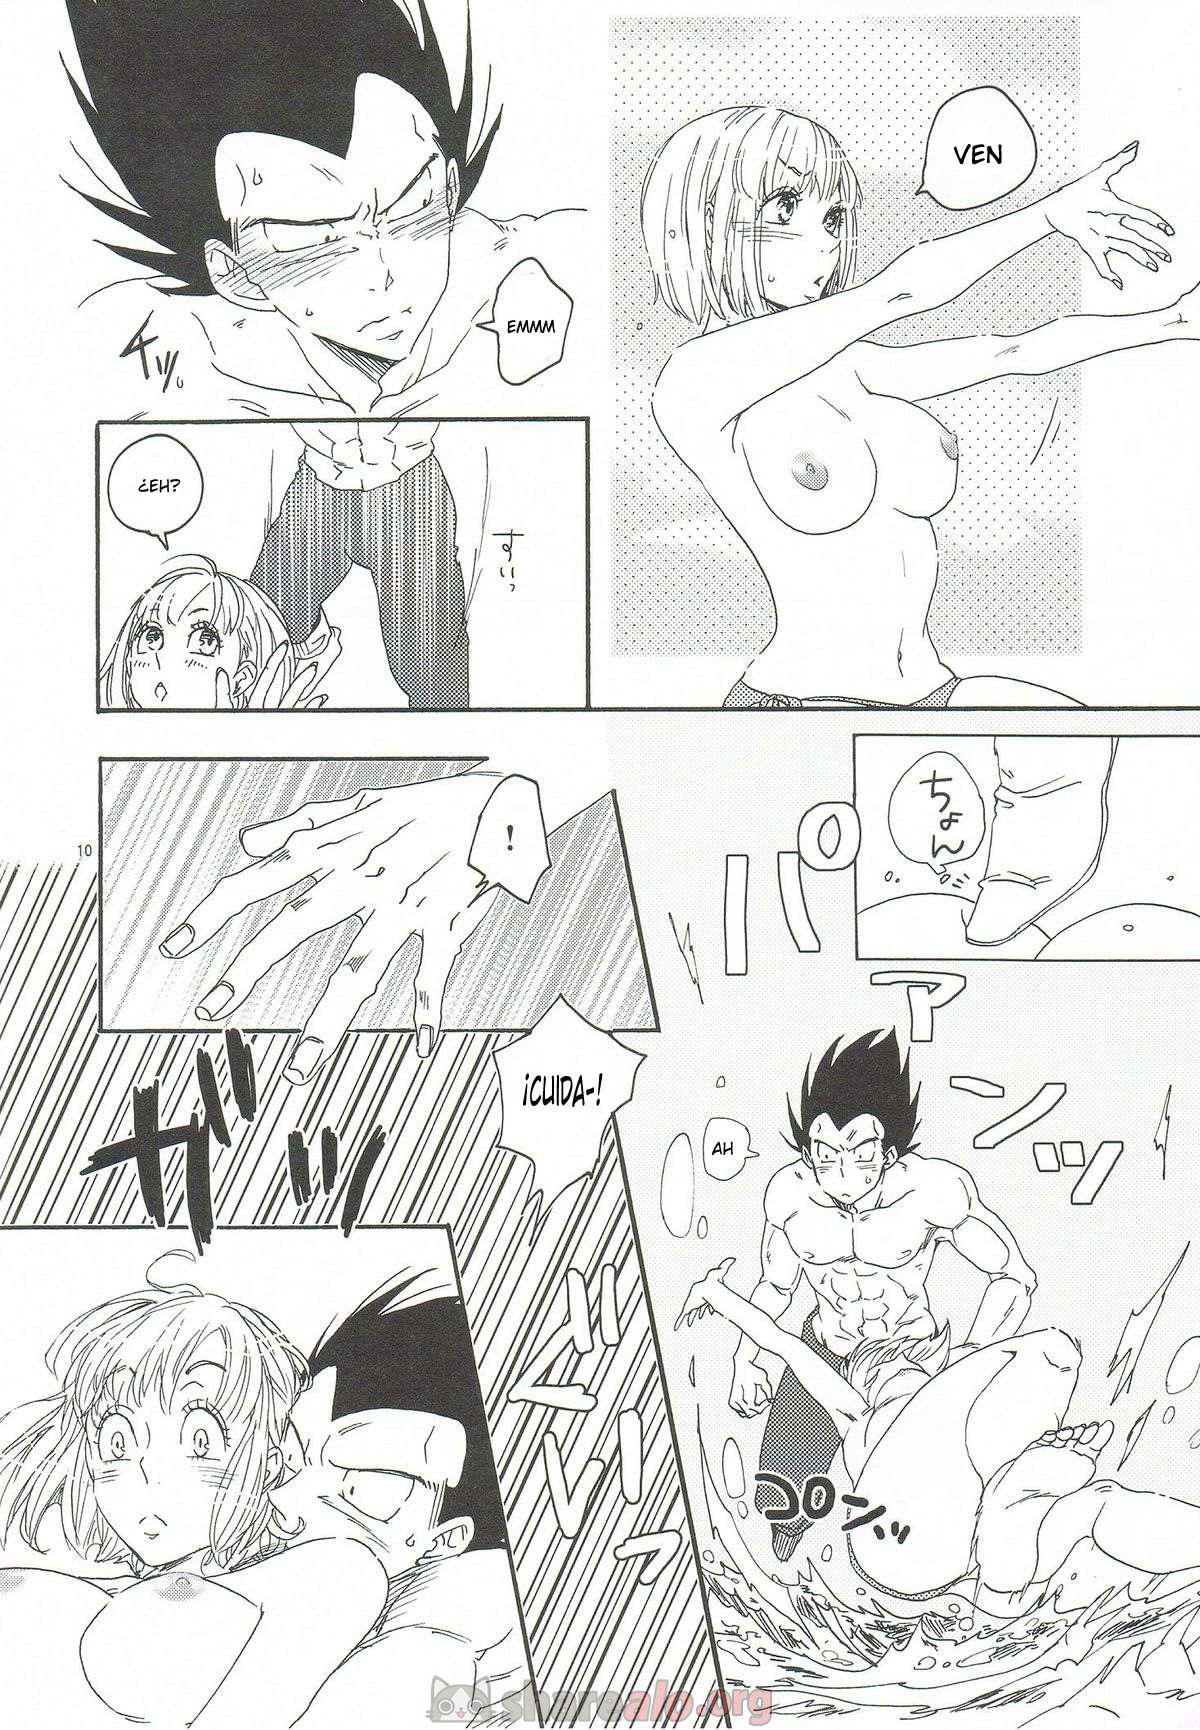 Summer (Verano) DBZ - 9 - Comics Porno - Hentai Manga - Cartoon XXX